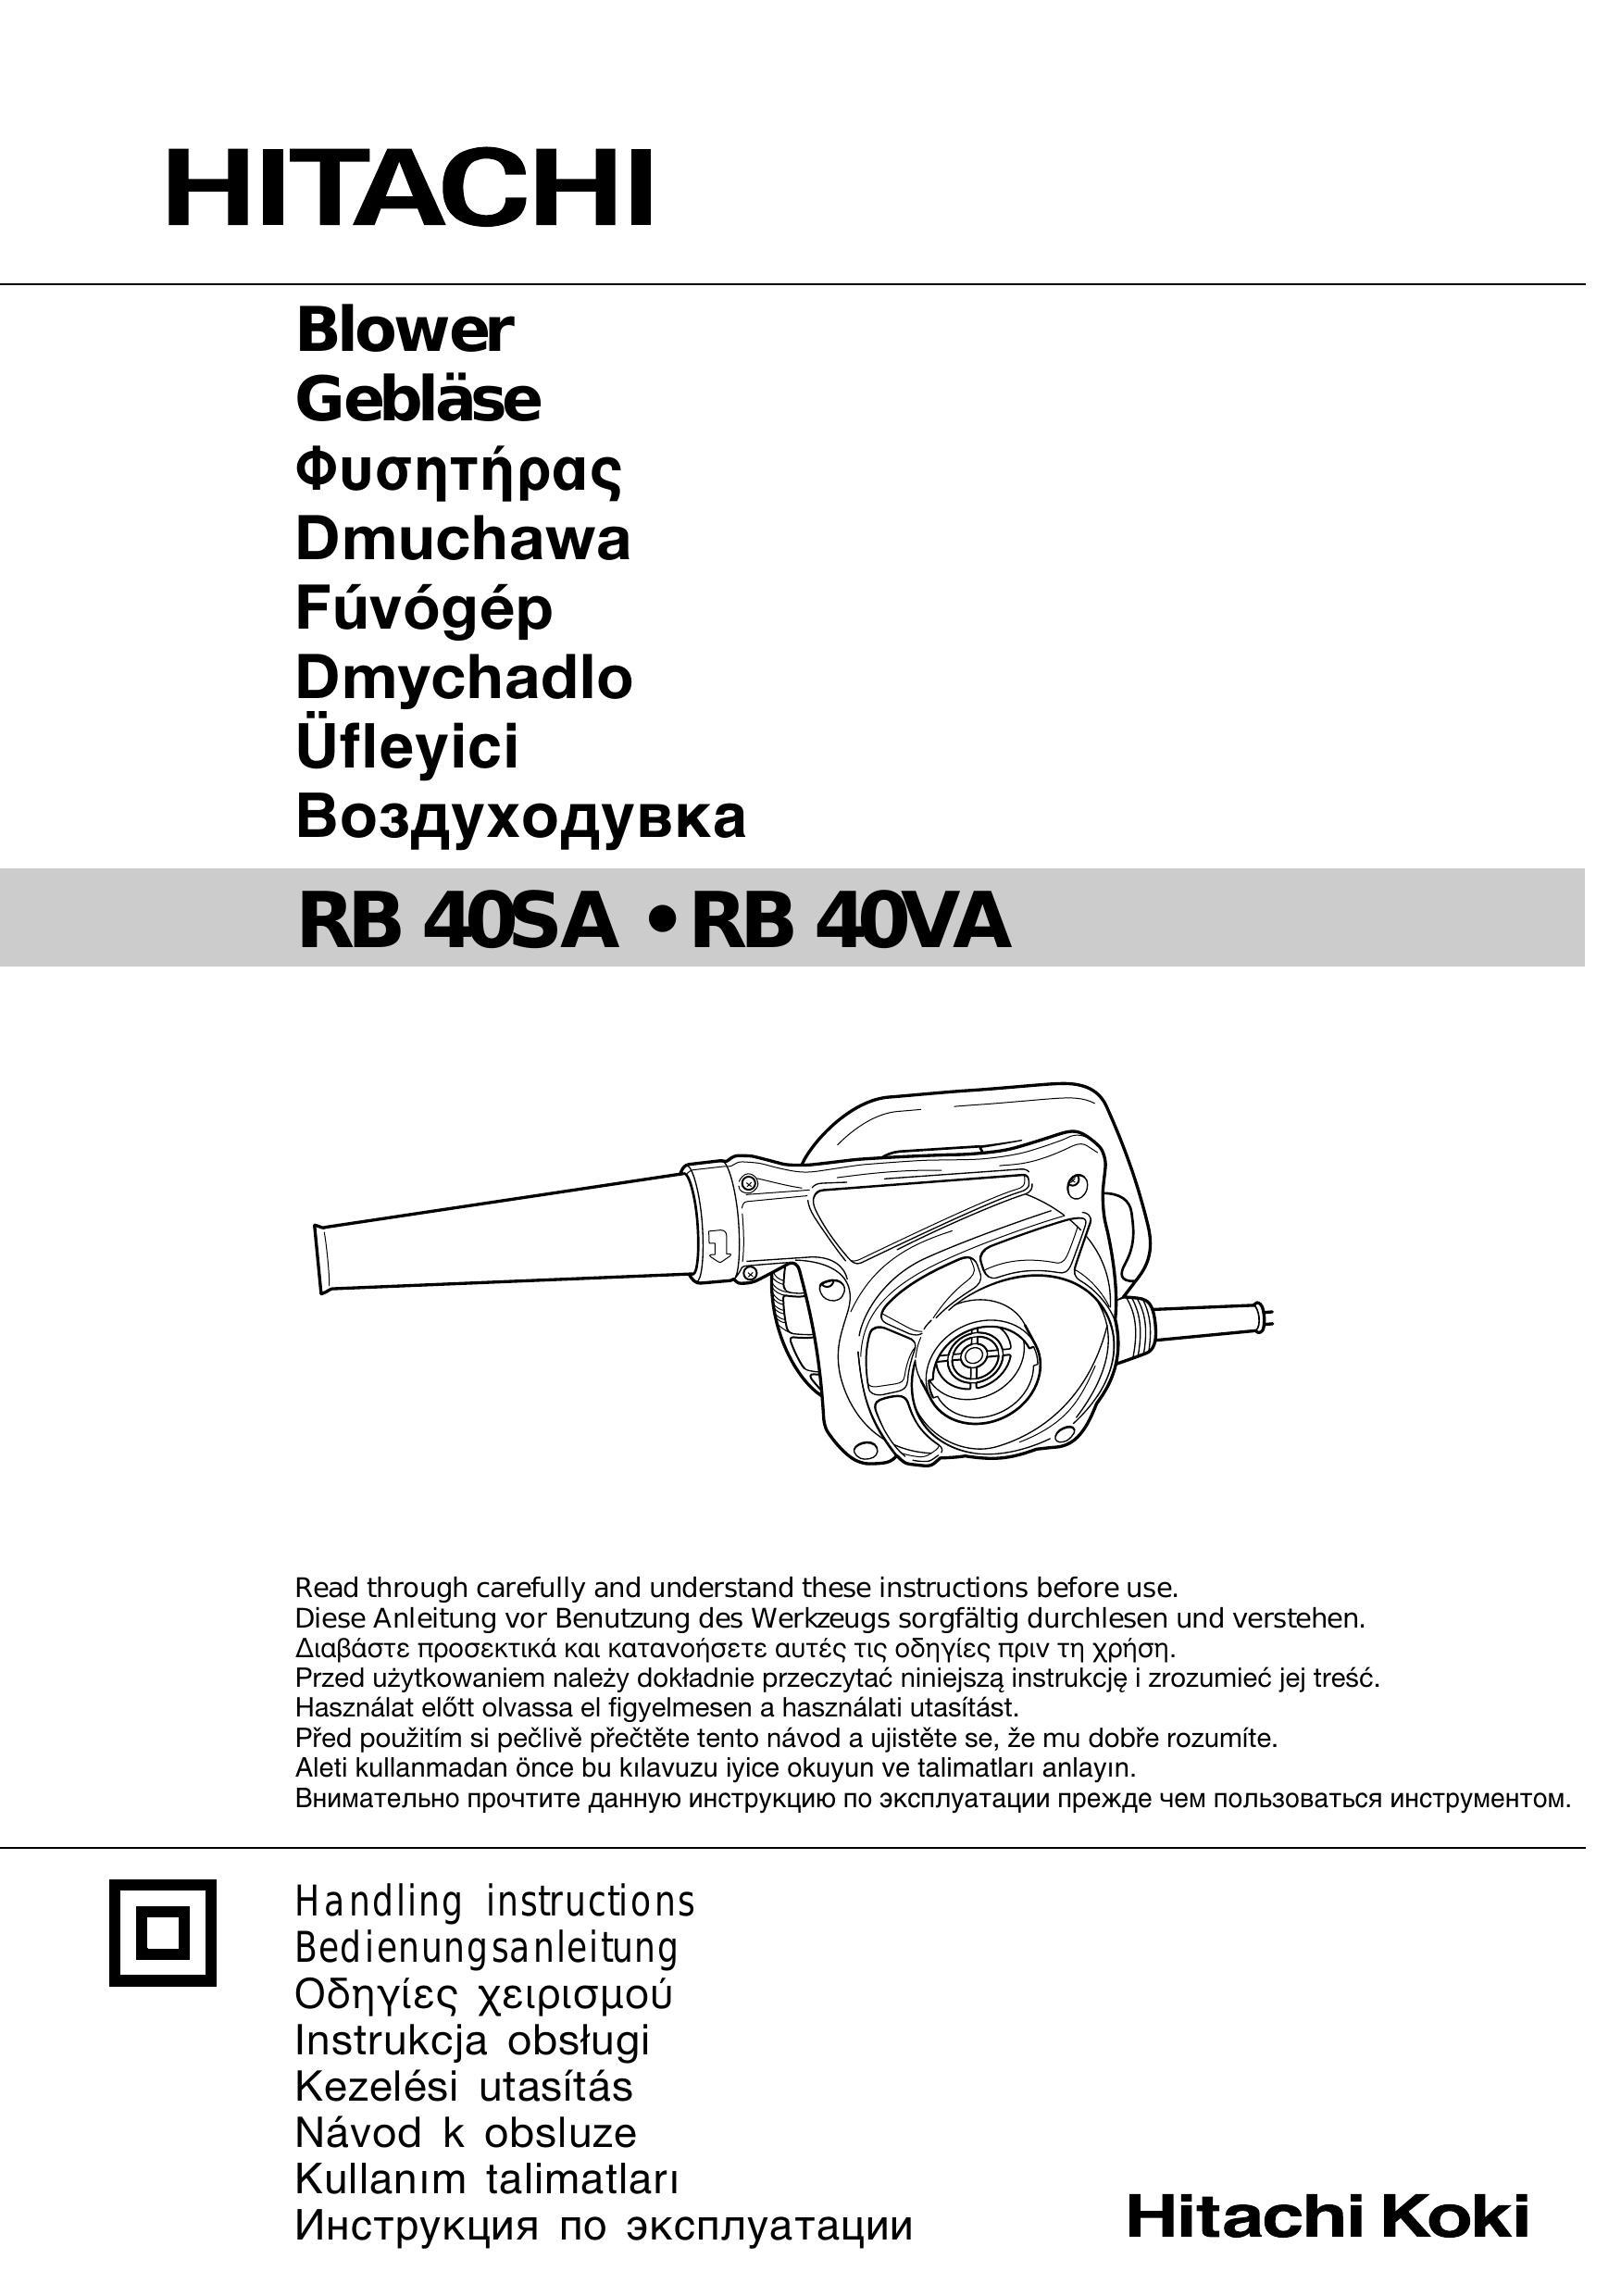 Humminbird RB 40VA Blower User Manual